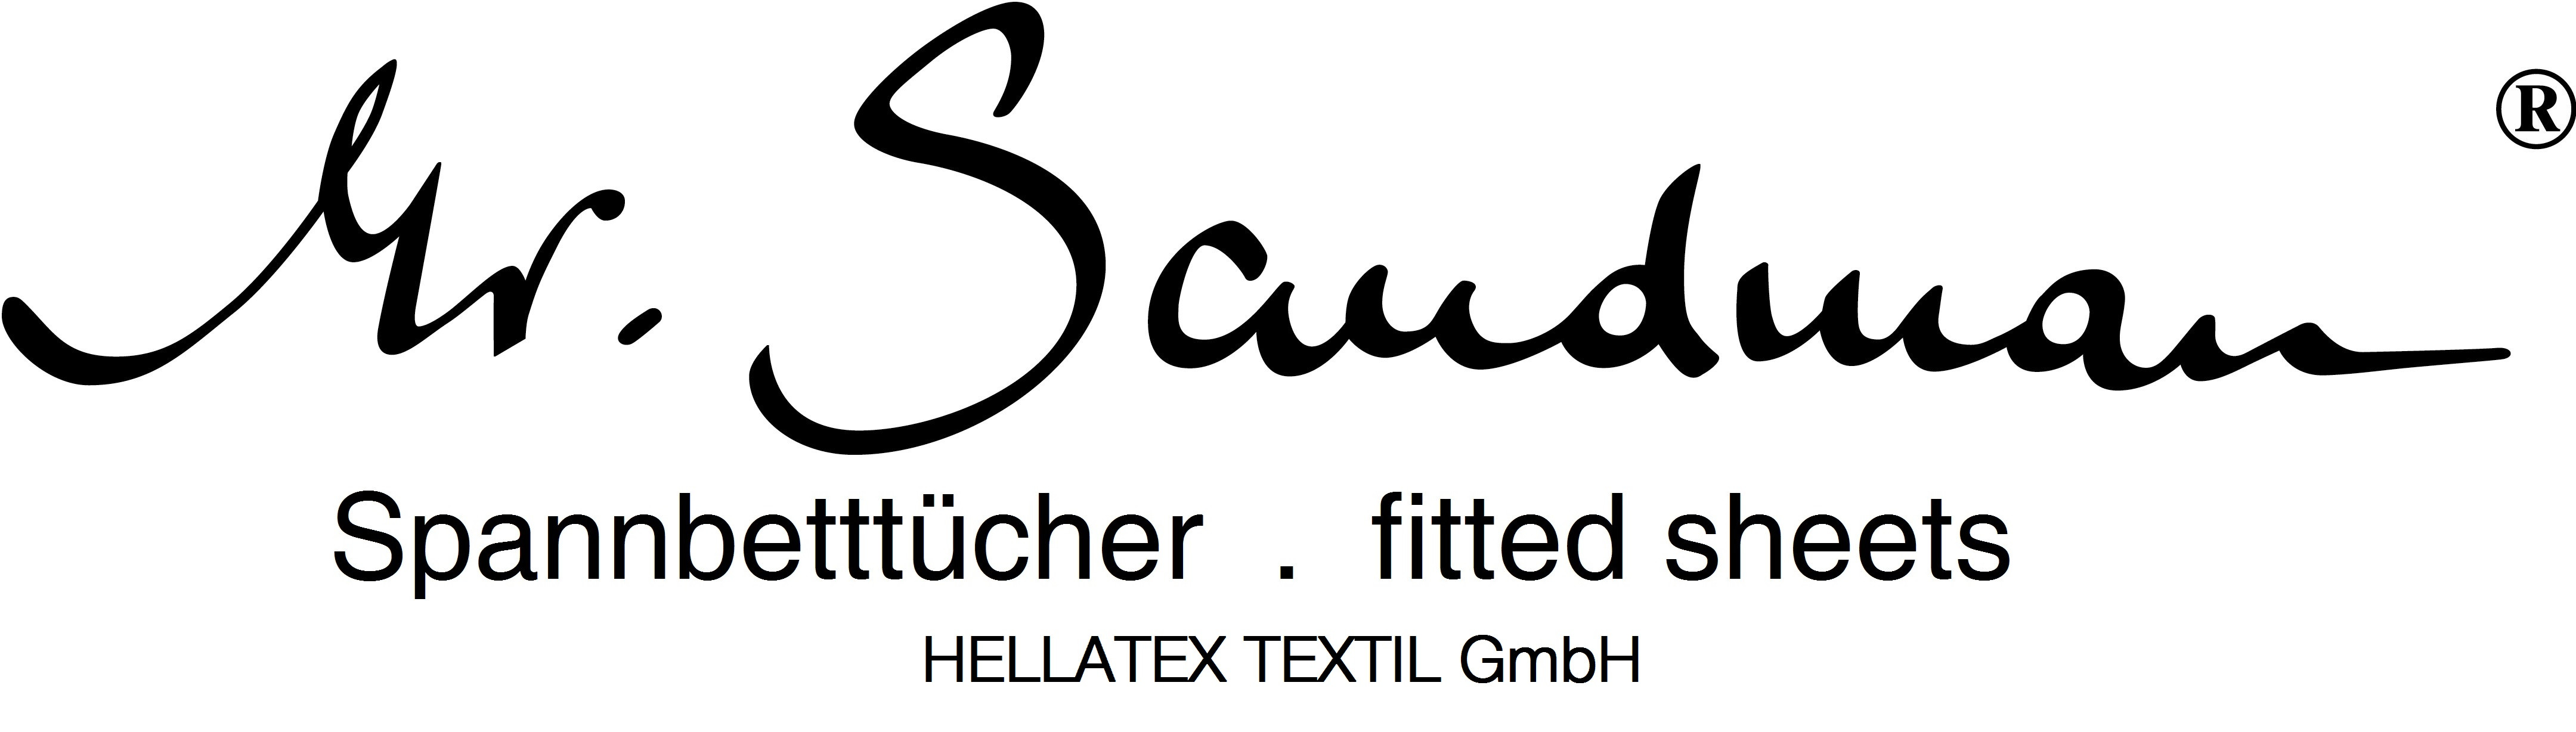 Hellatex Textil GmbH